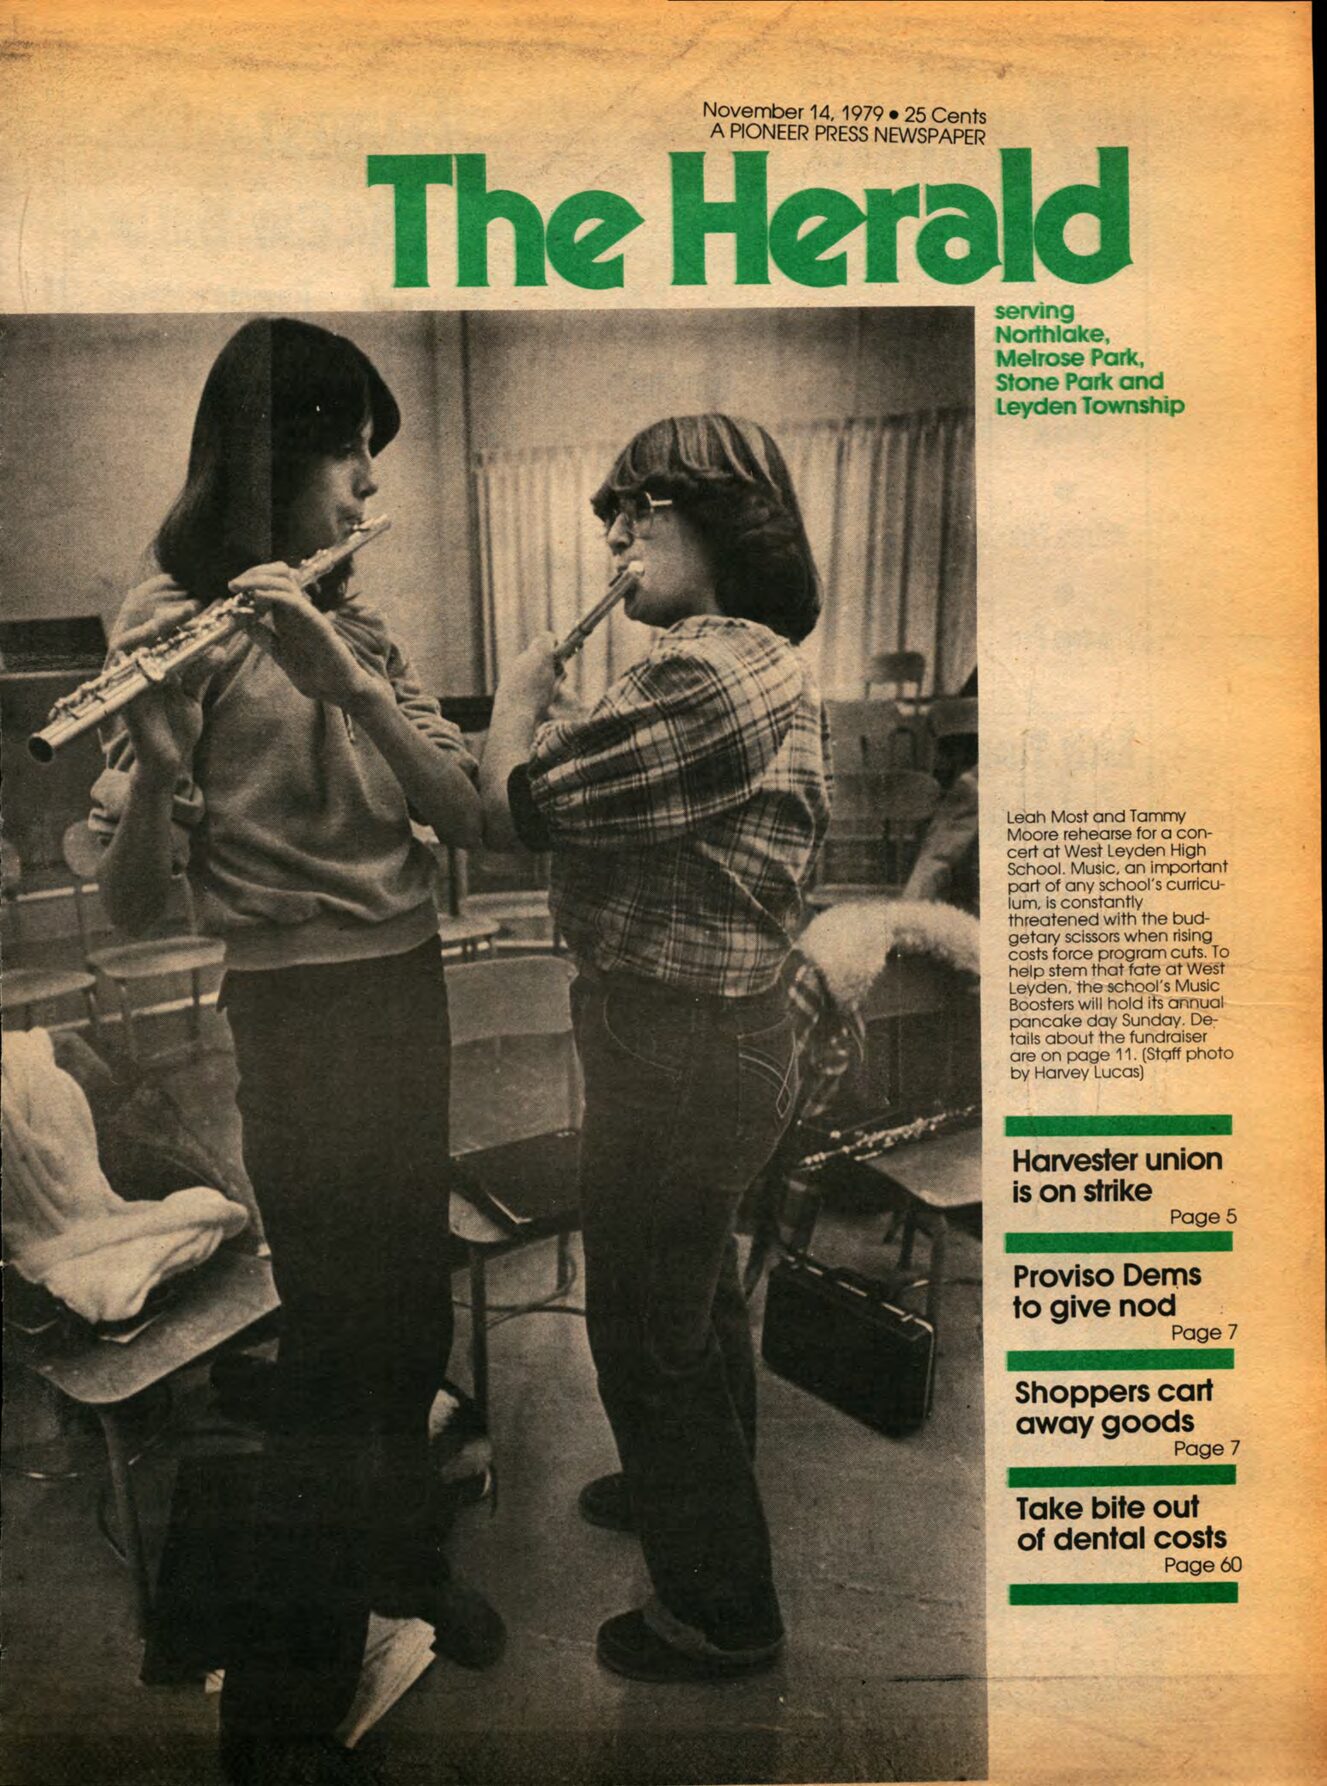 The Herald – 19791114